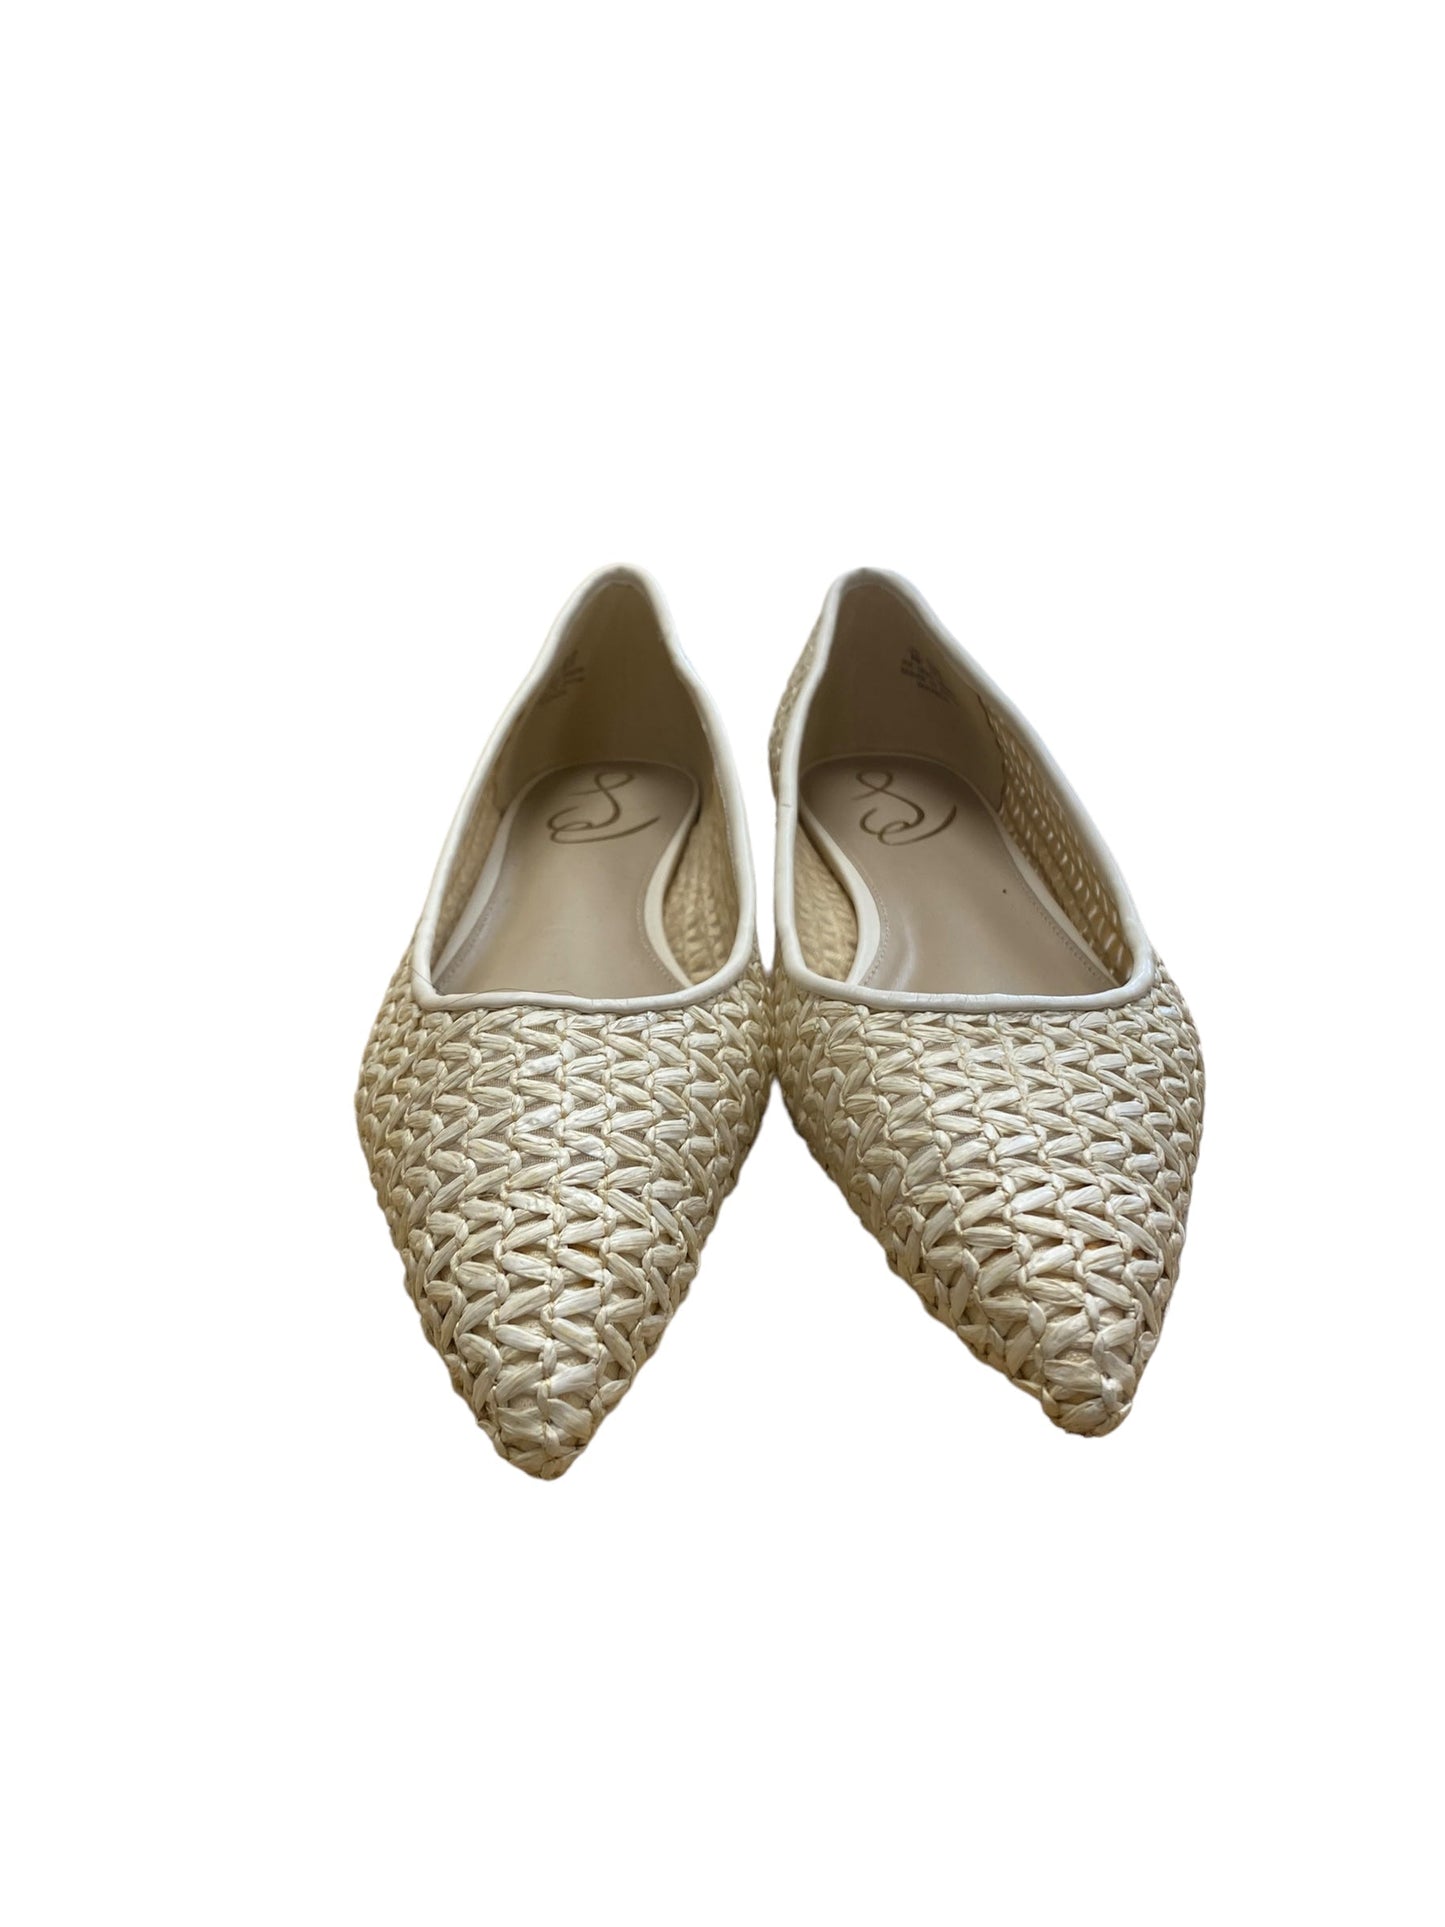 Cream Shoes Flats Sam Edelman, Size 8